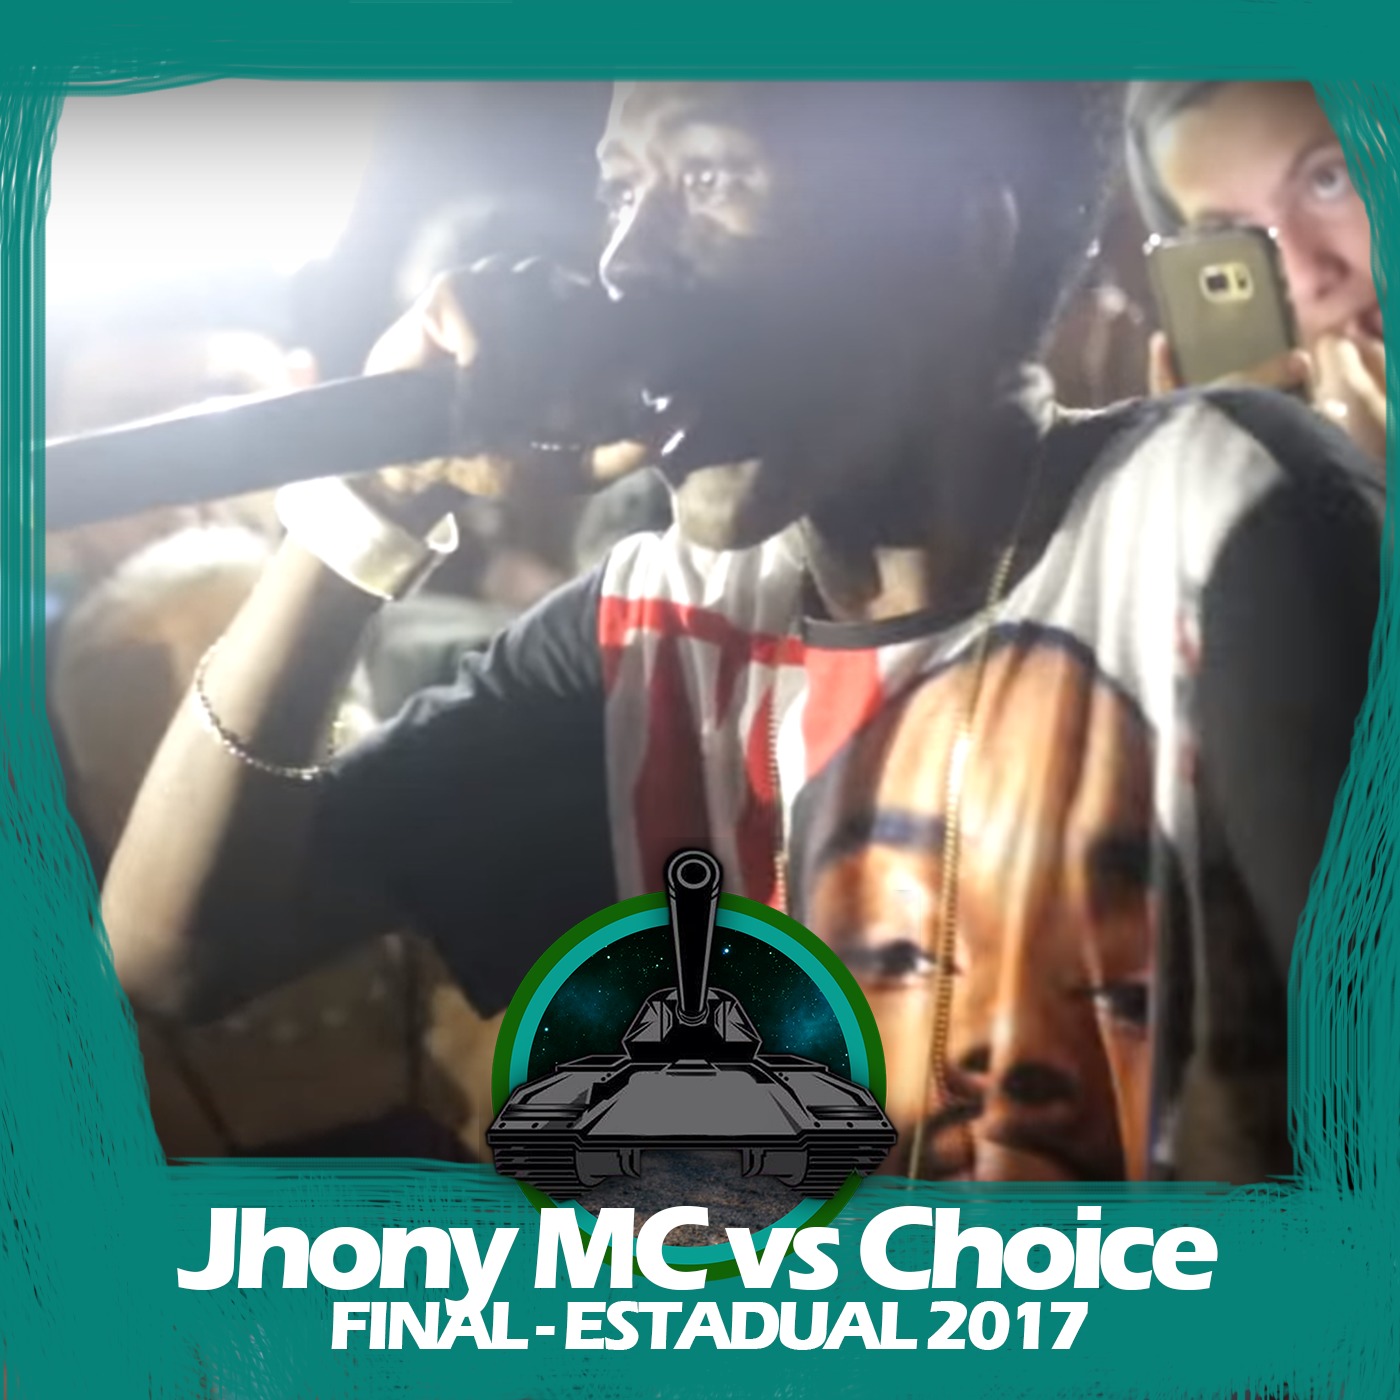 Jhony MC X Choice (Estadual 2017 Final)